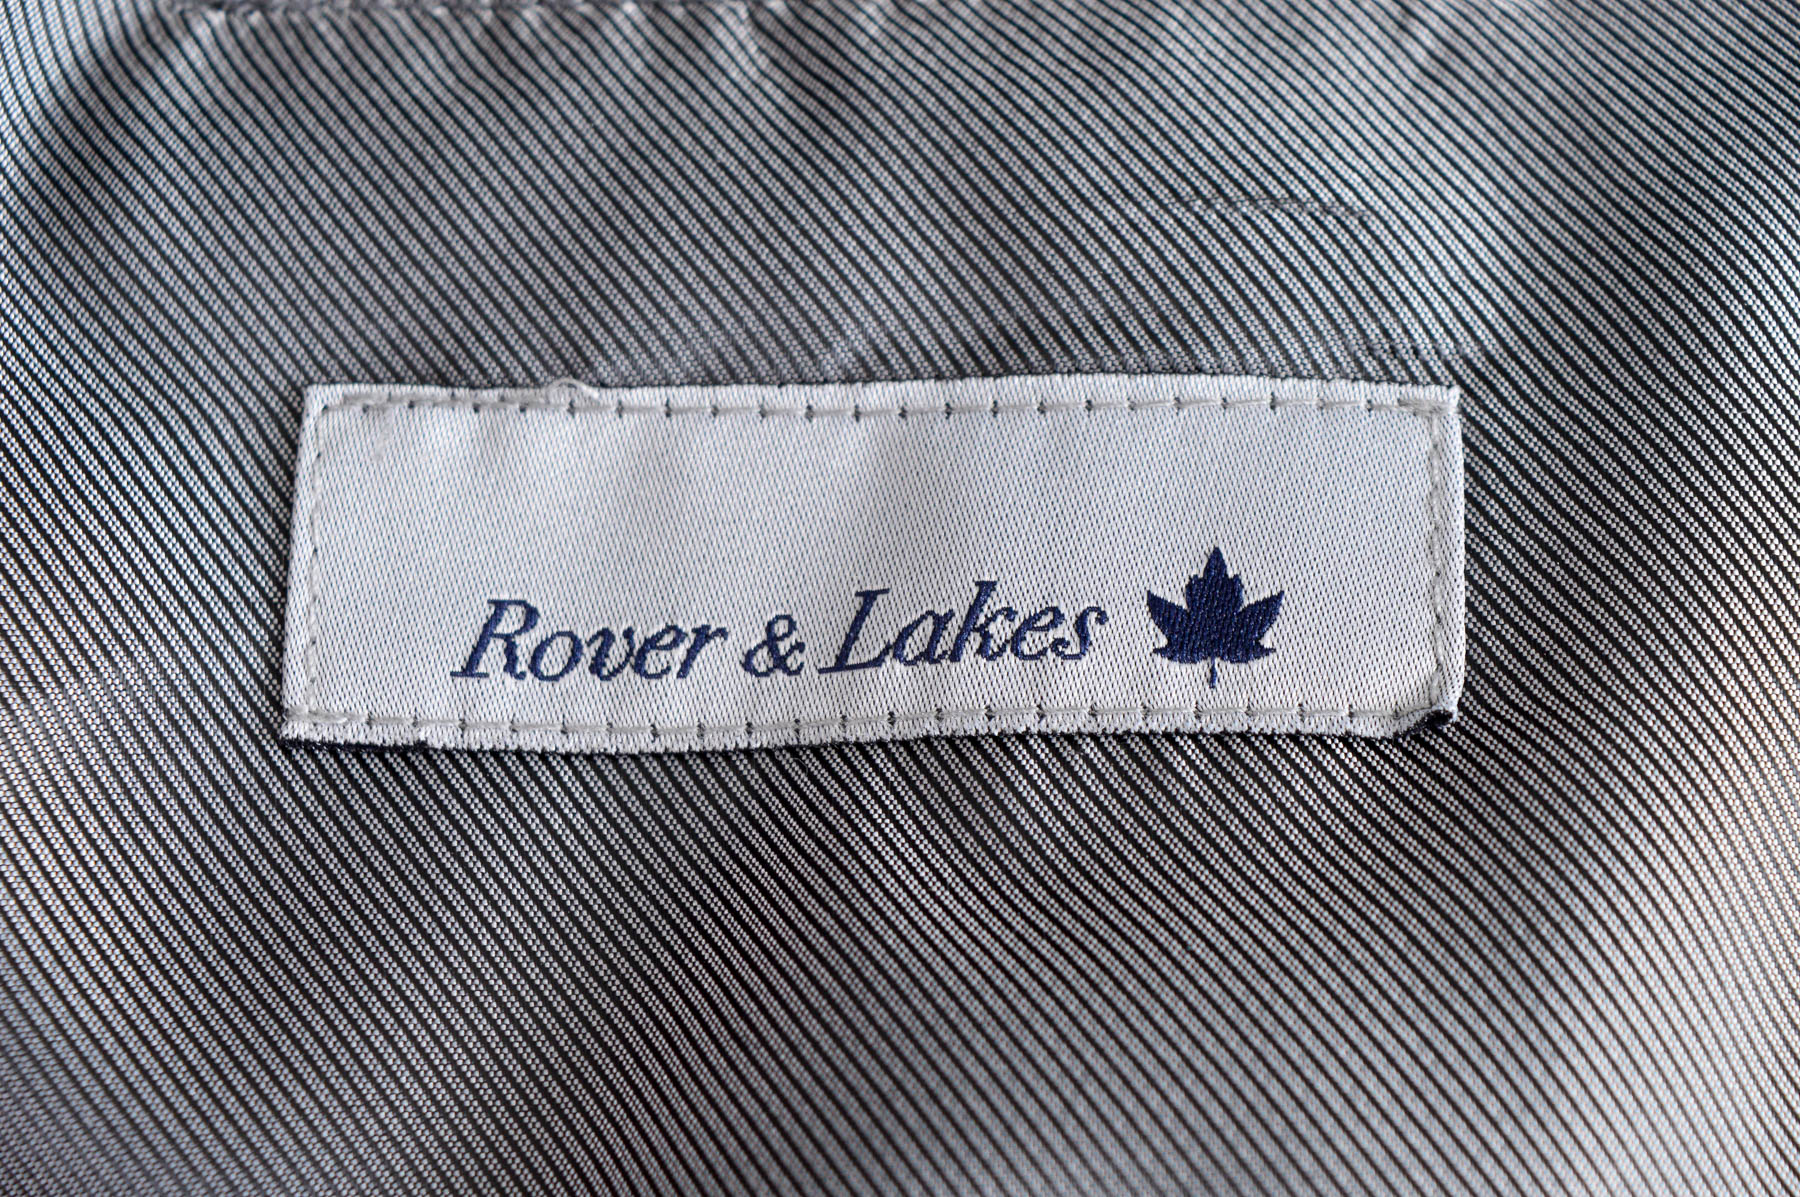 Men's blazer - Rover & Lakes - 2